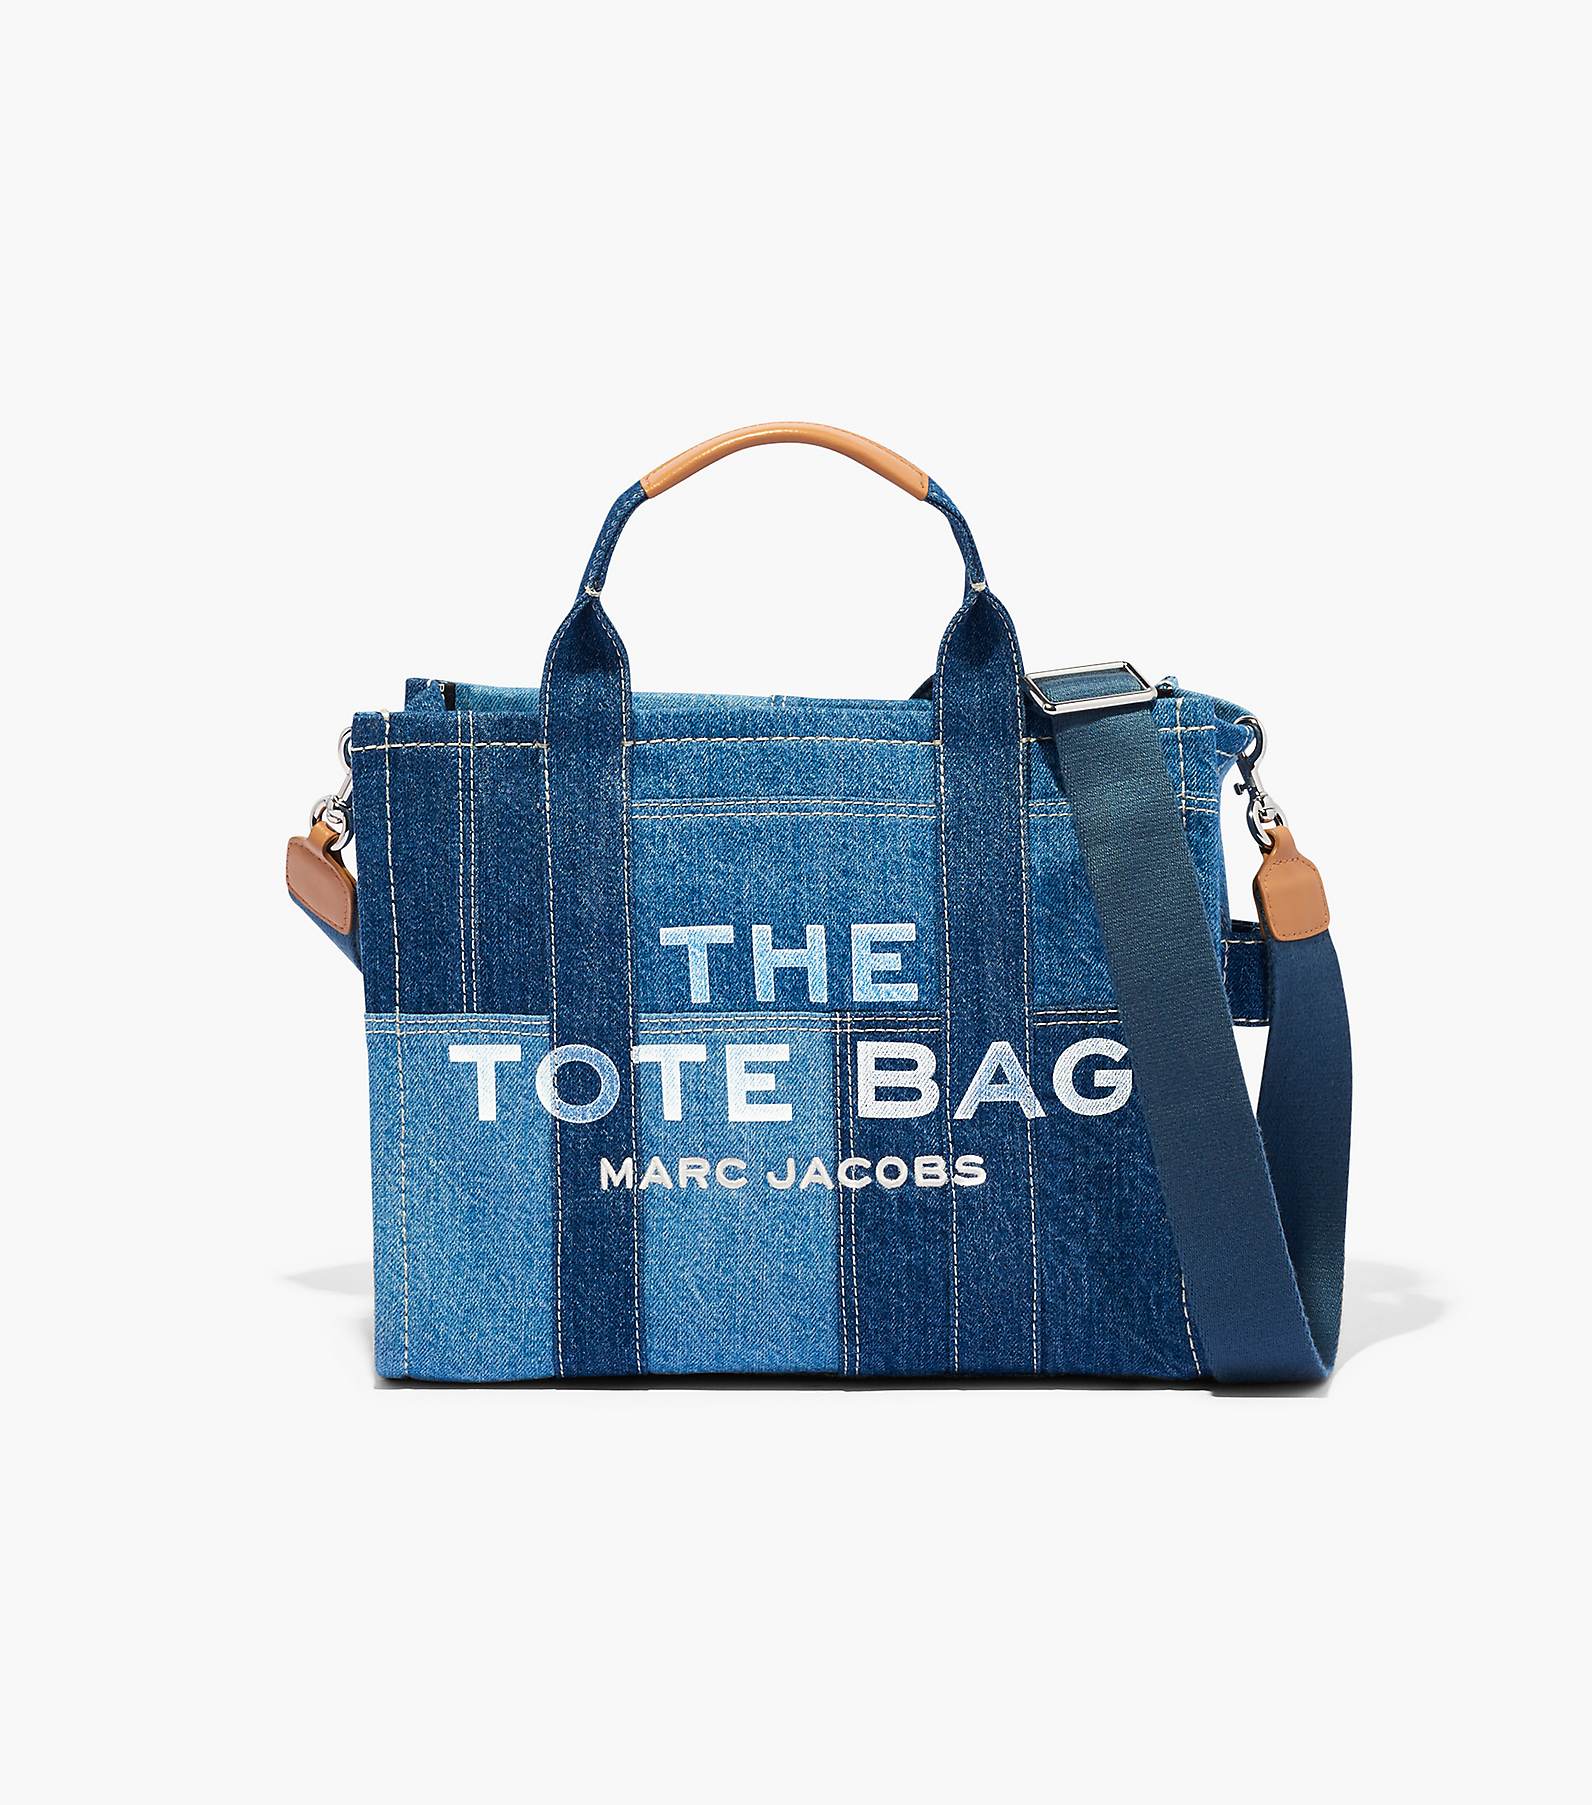 The Denim Medium Tote Bag, Marc Jacobs